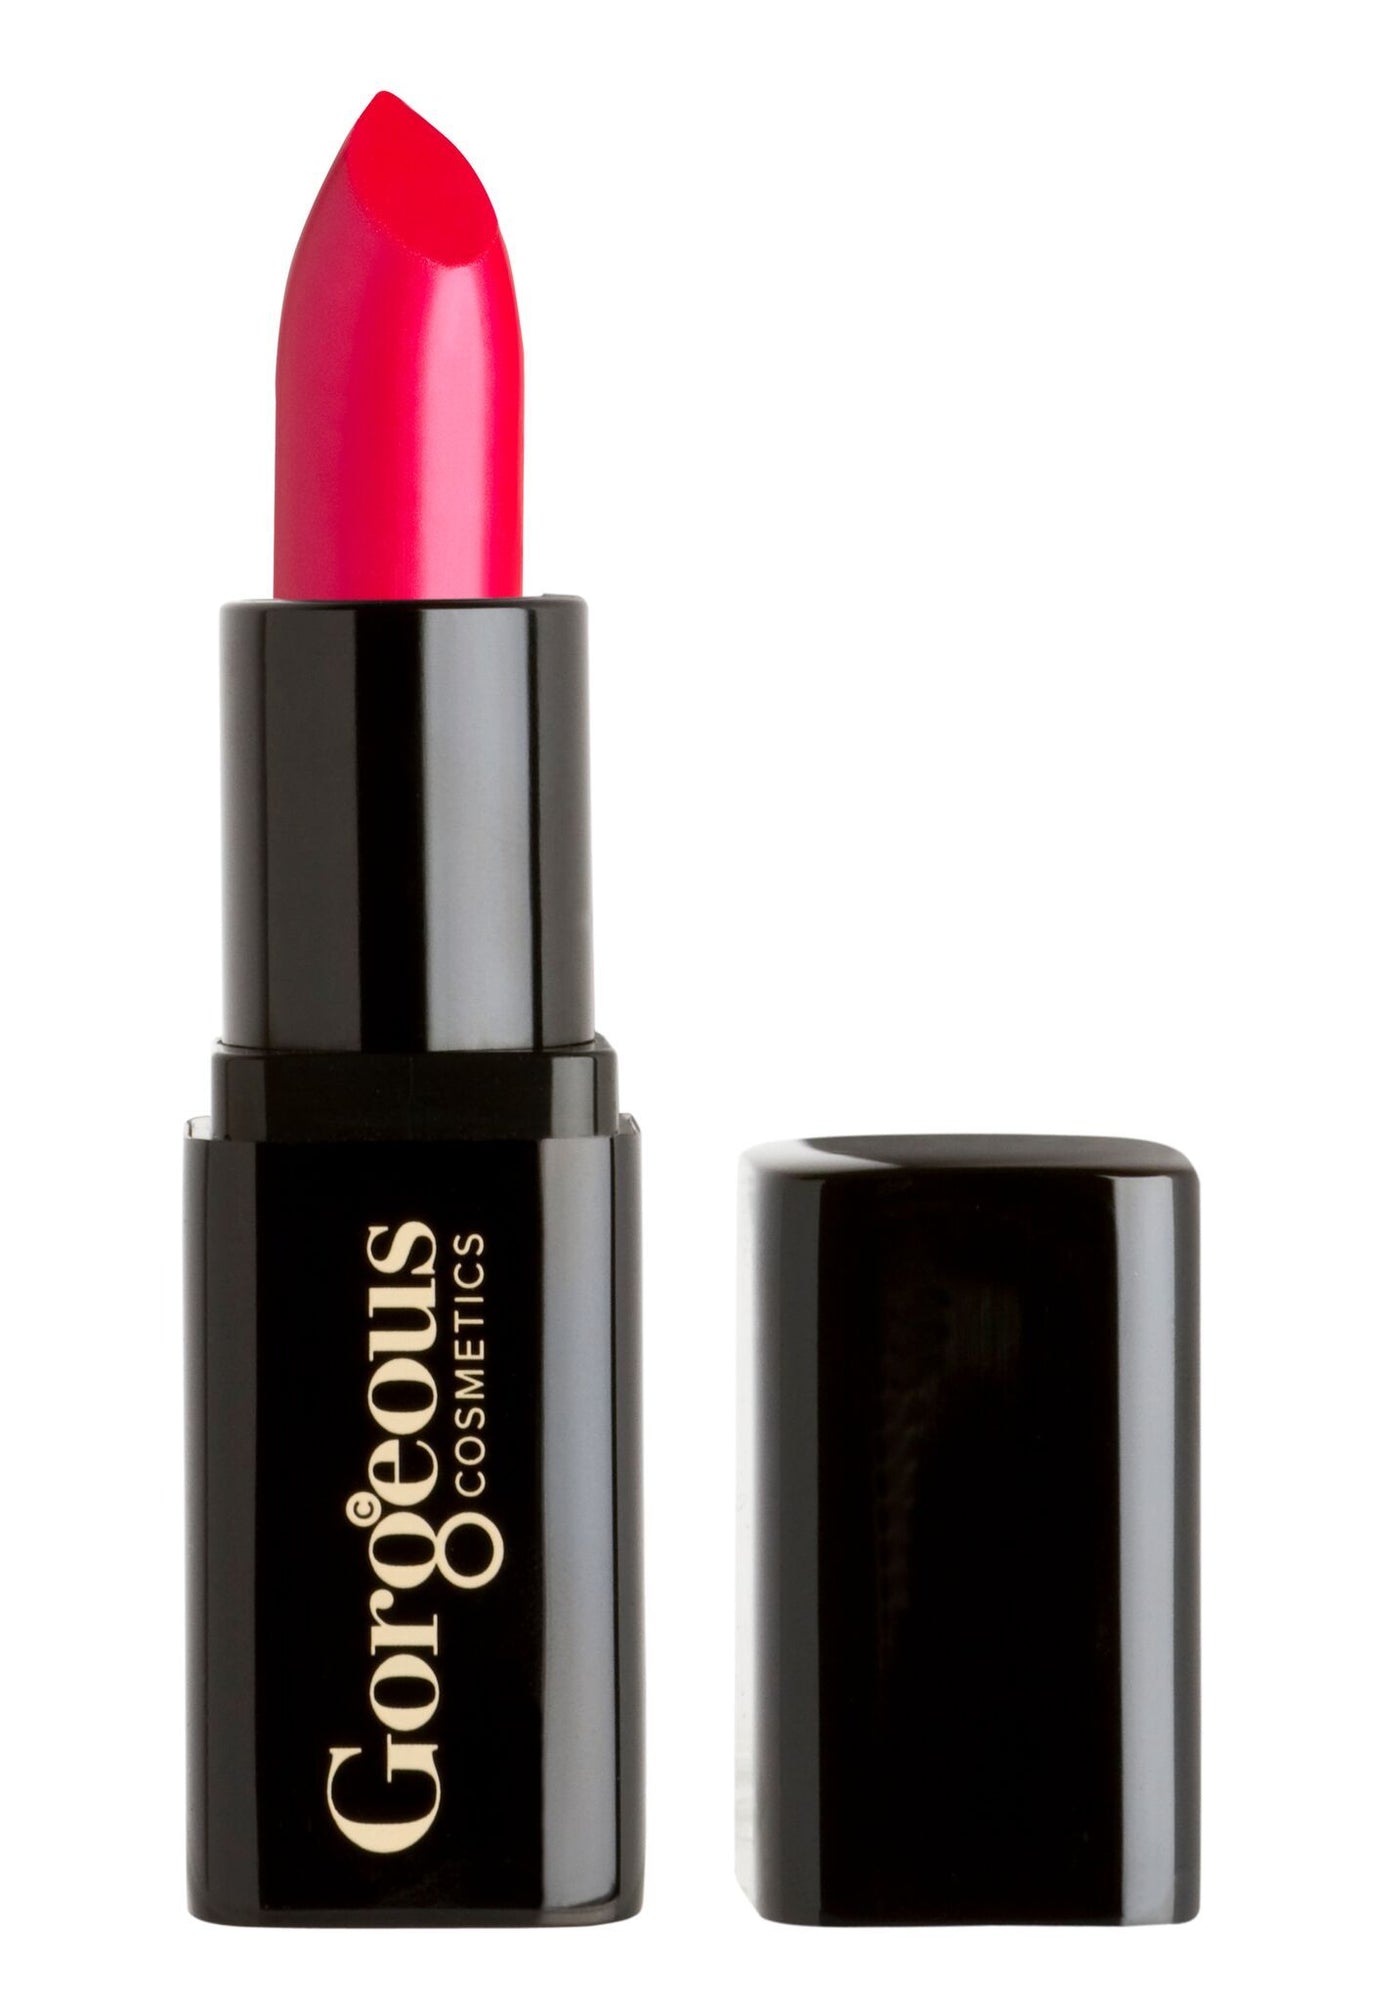 Gorgeous Lipstick - Bombshell - Hey Sara